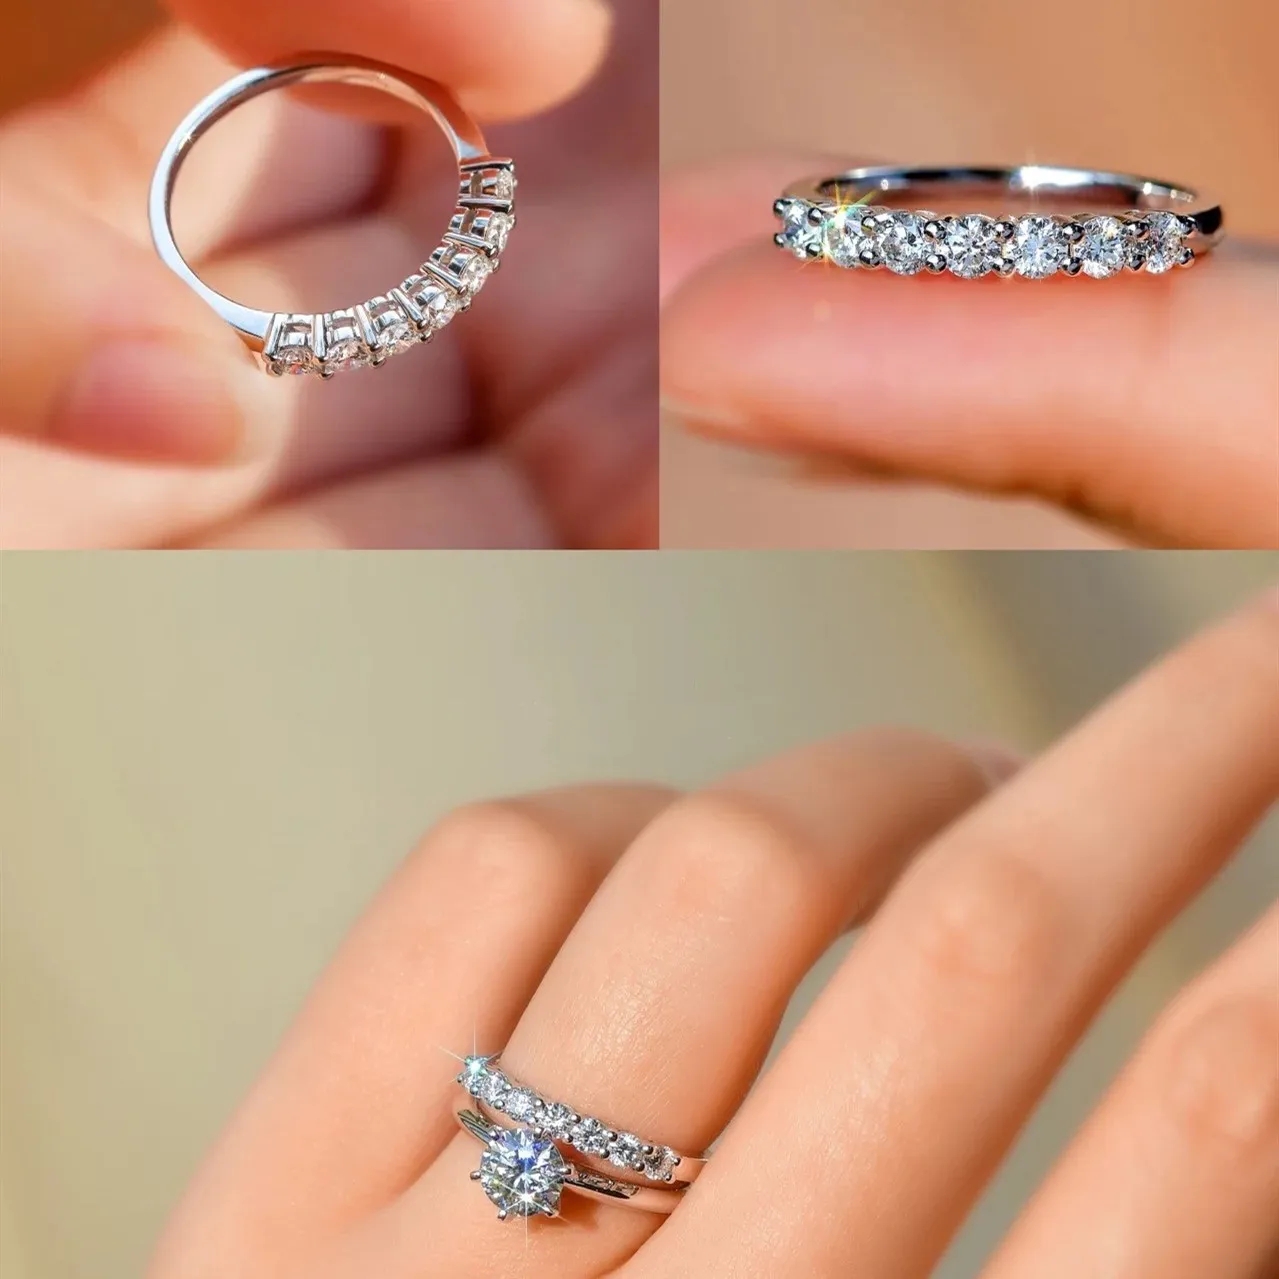 Synthetic diamond ring